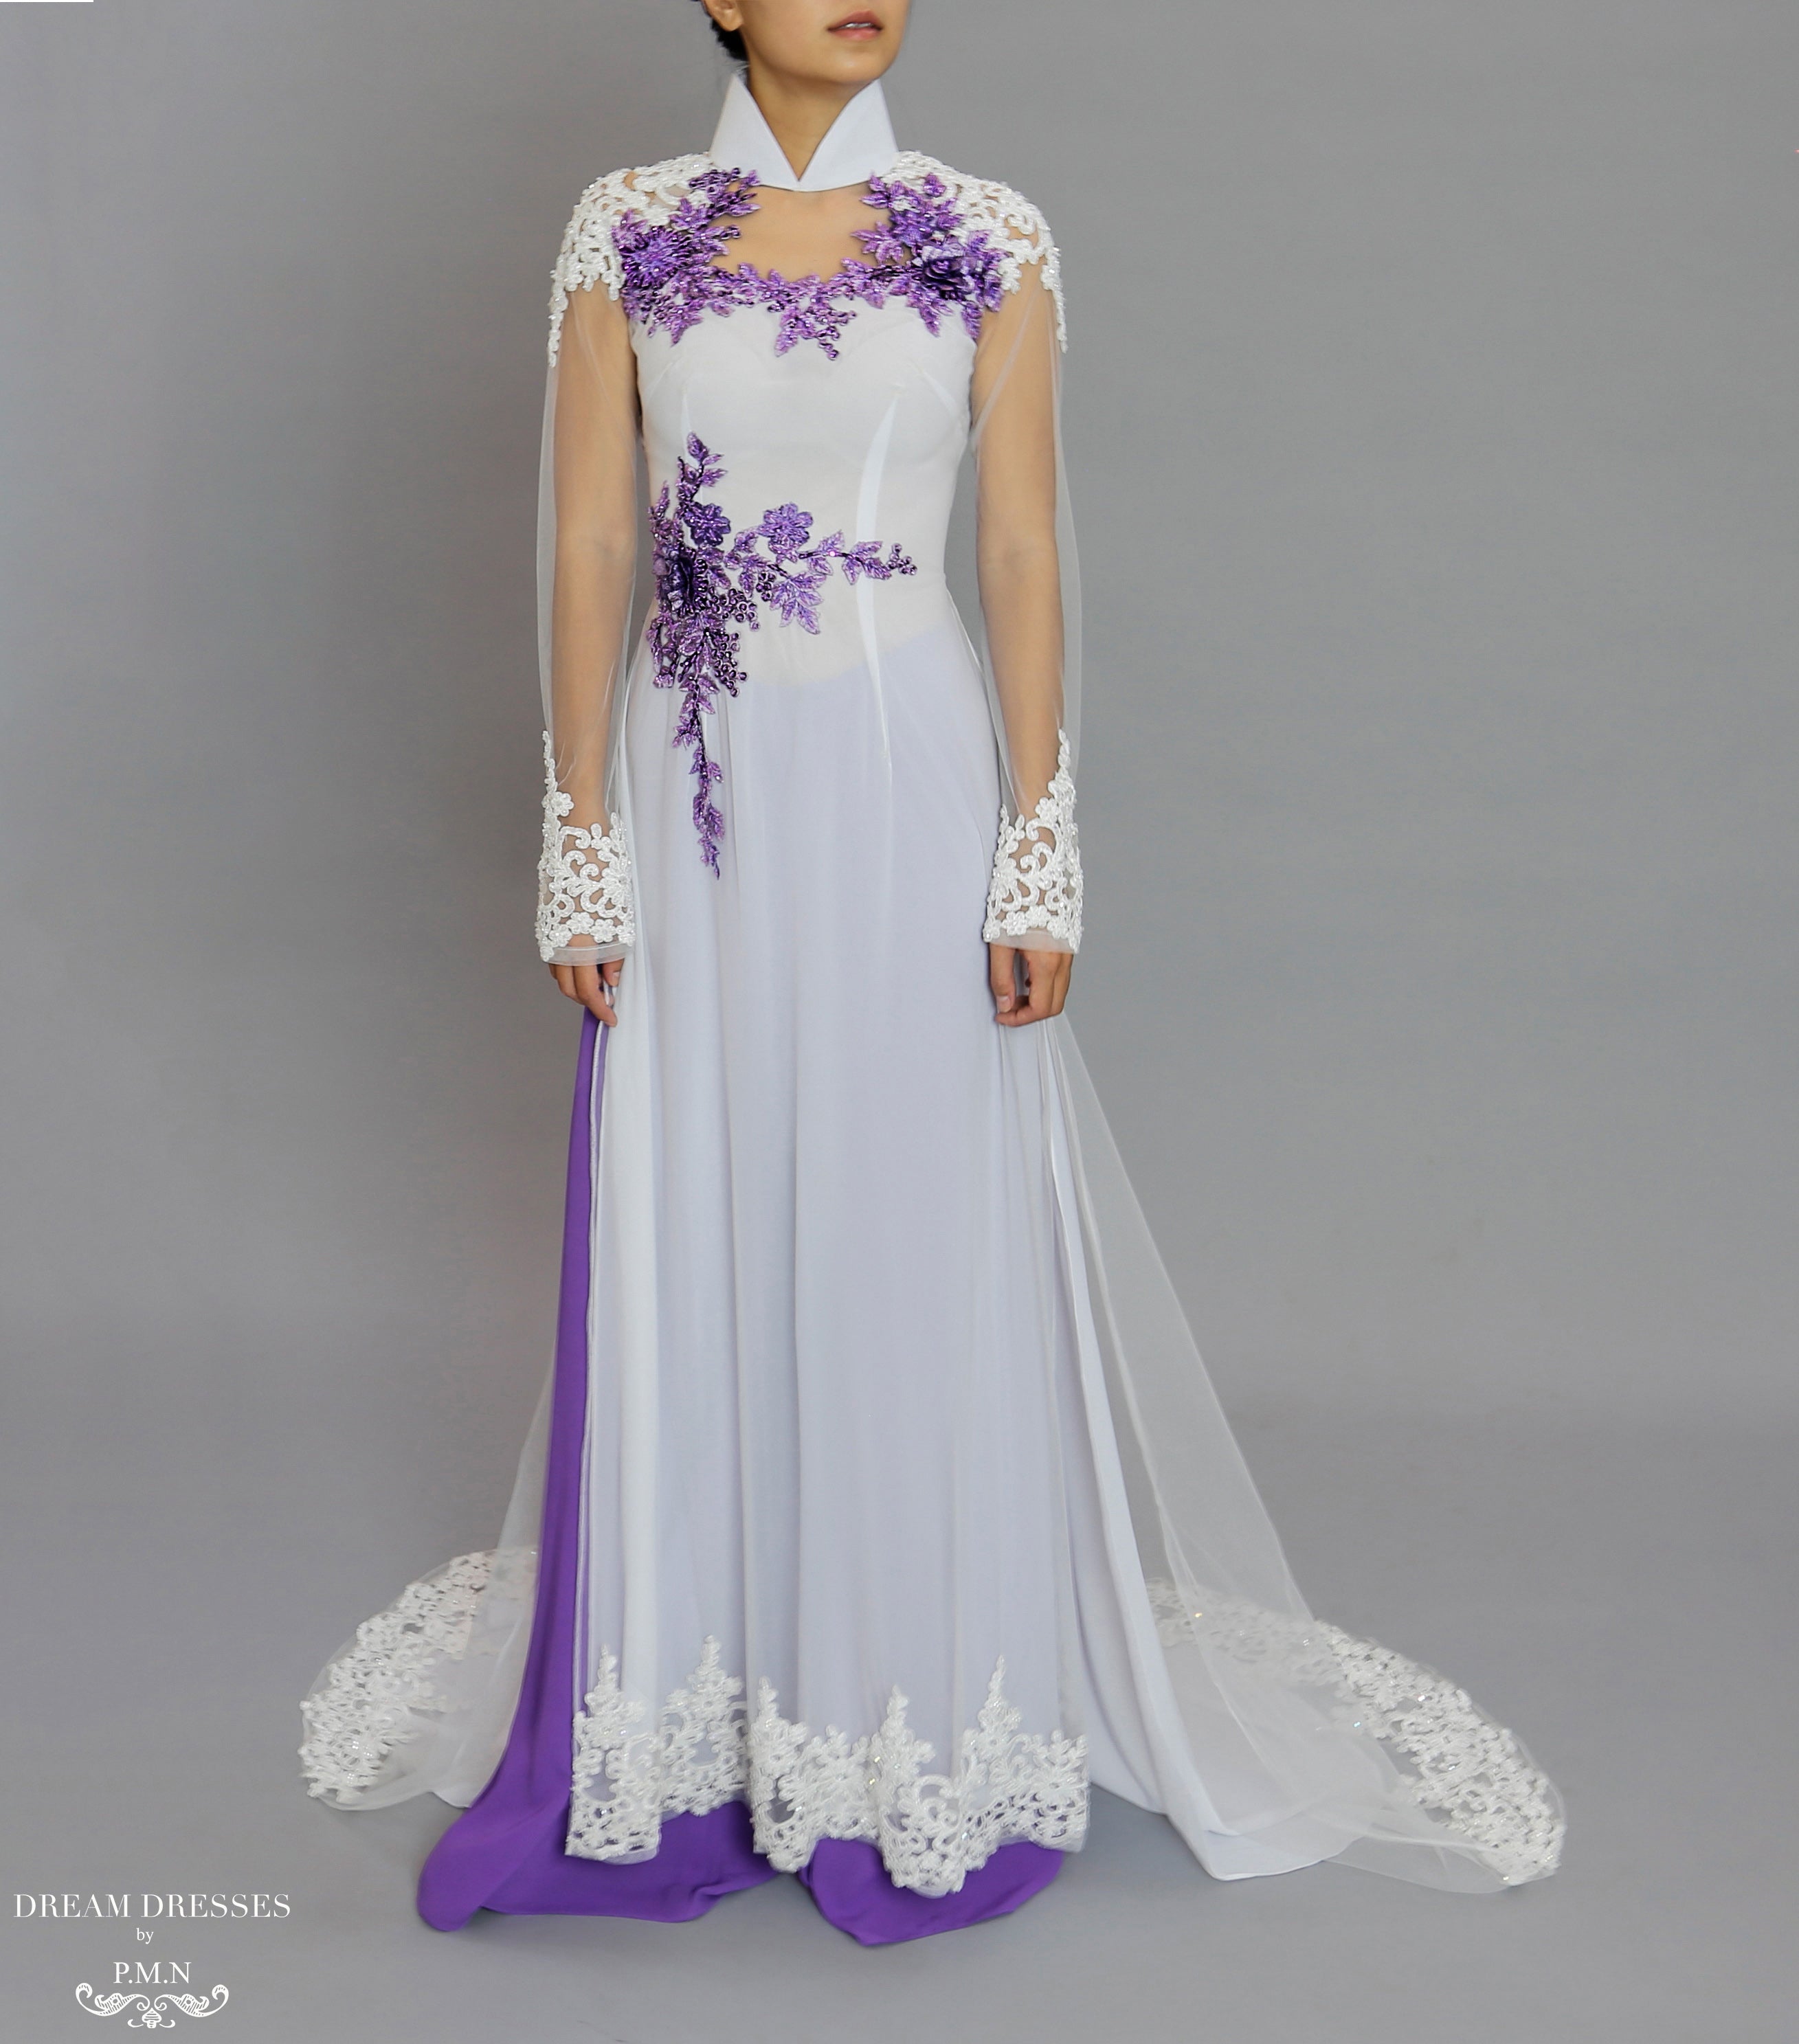 white wedding dress with purple lace